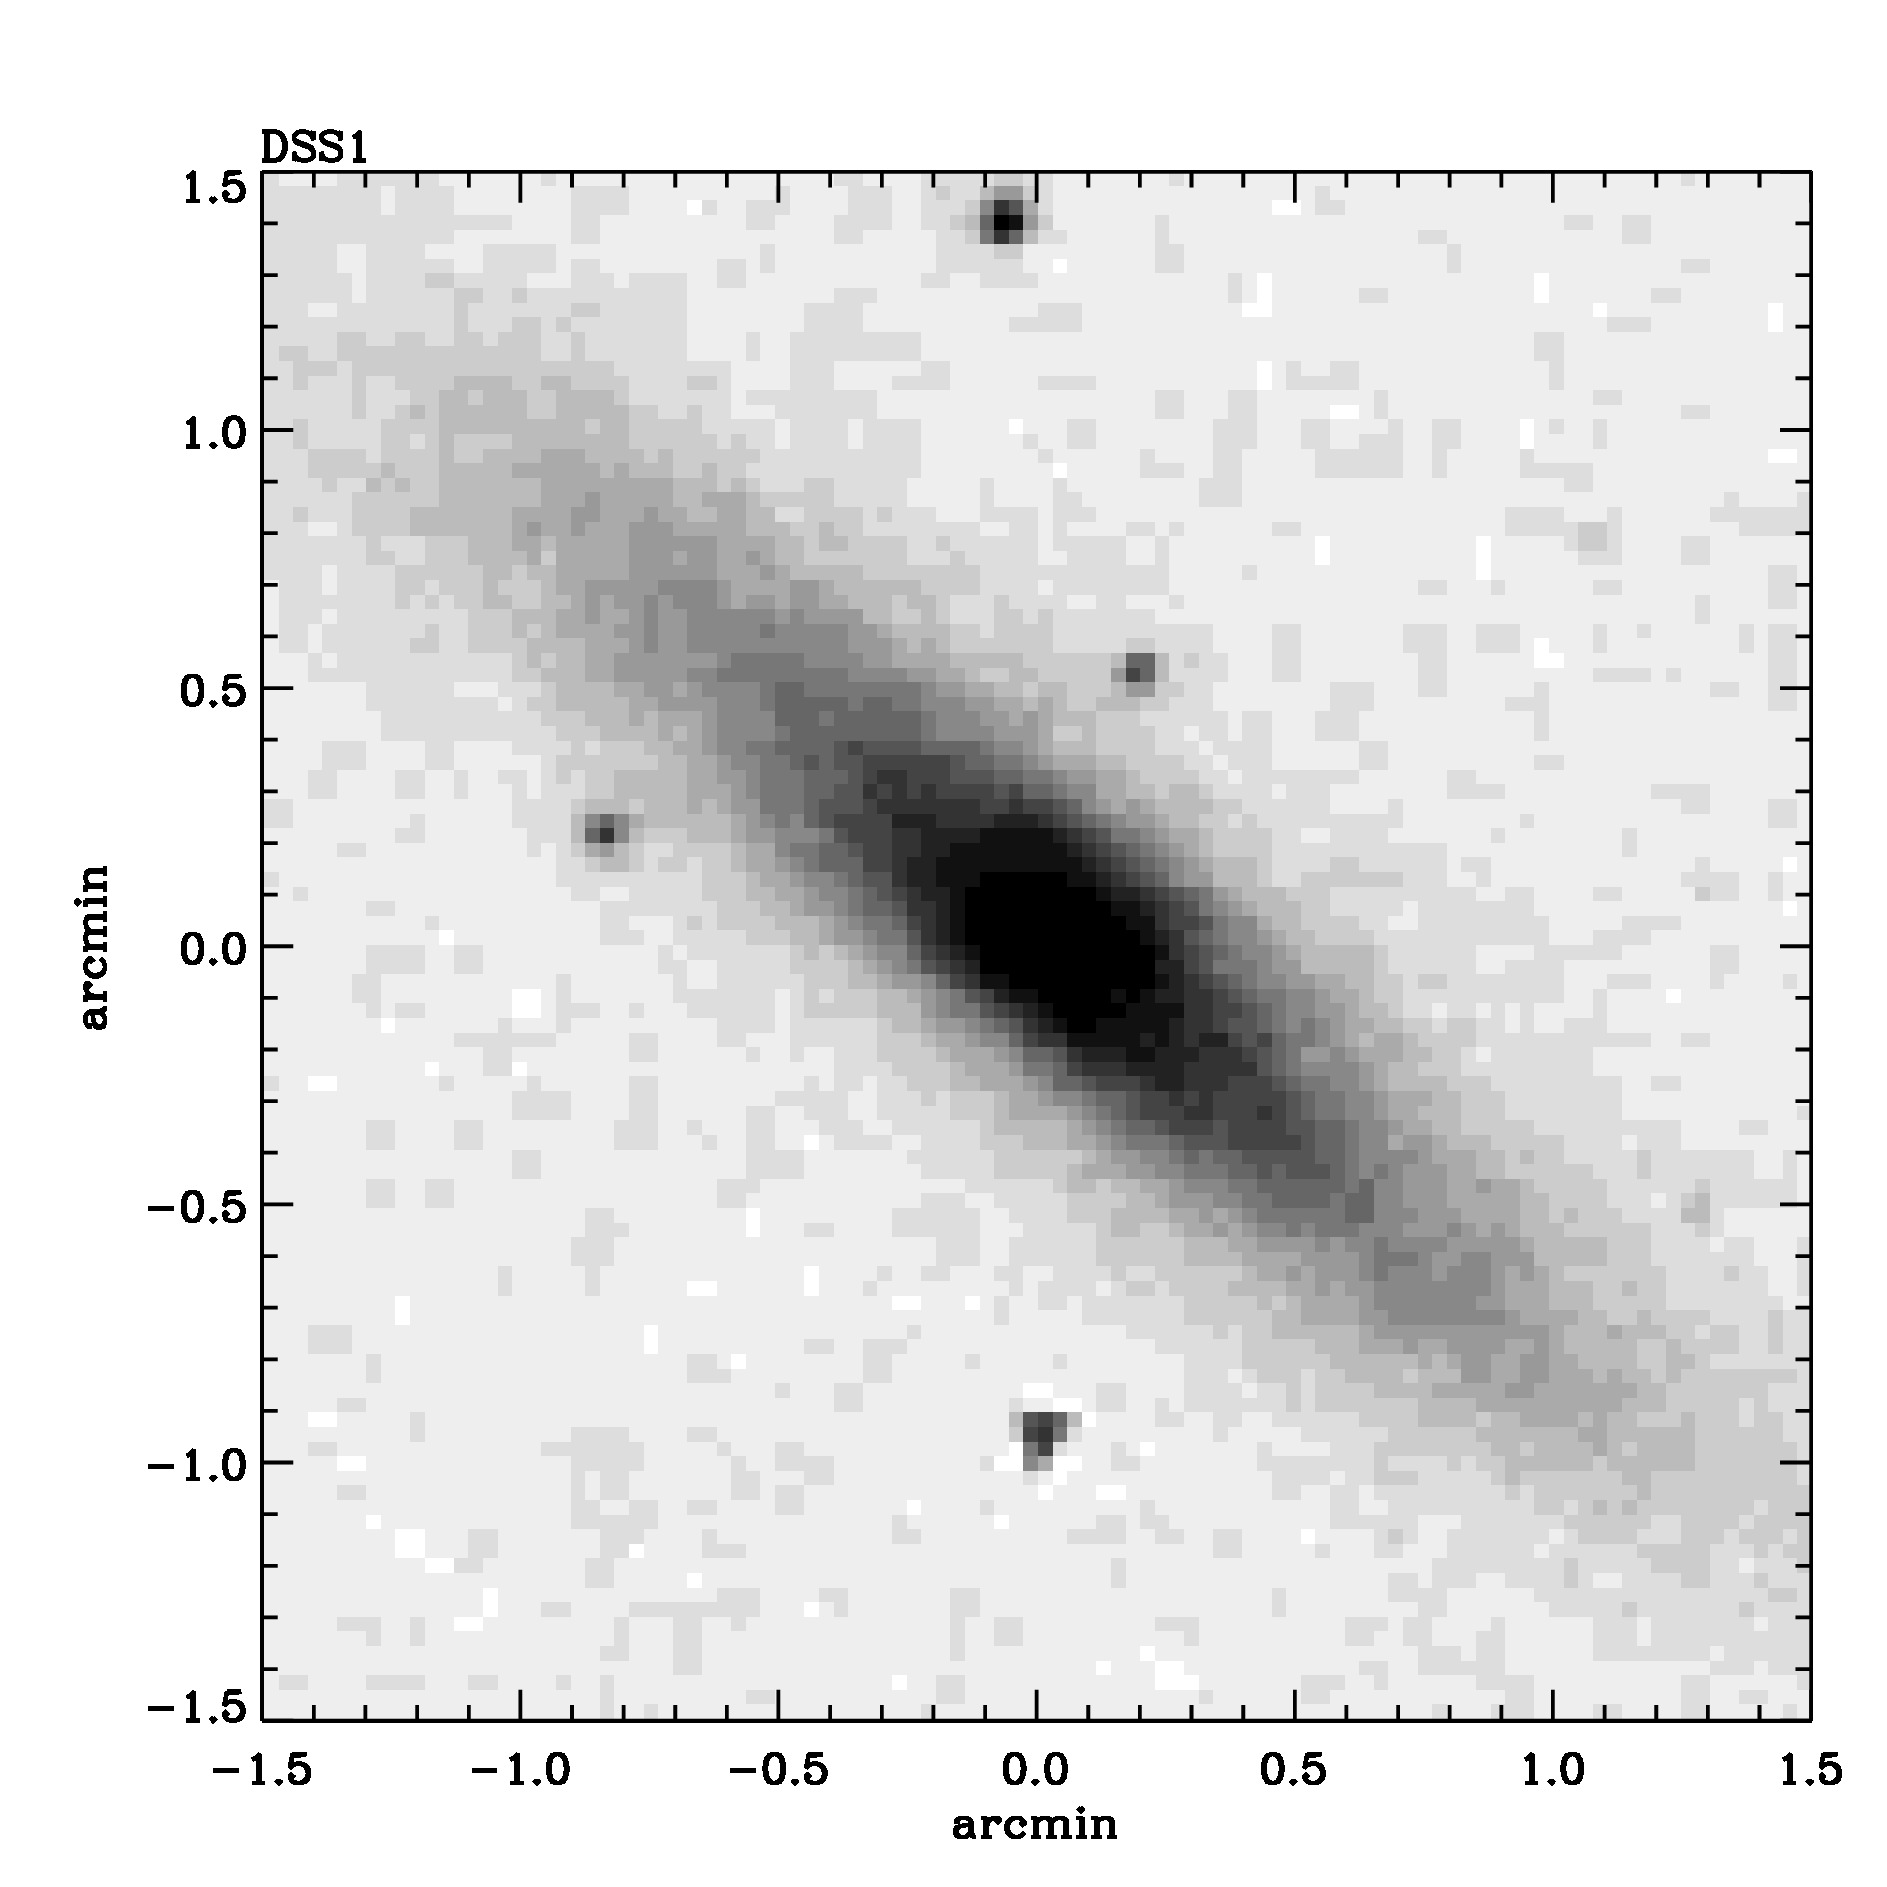 Optical image for SWIFT J1217.3+0714